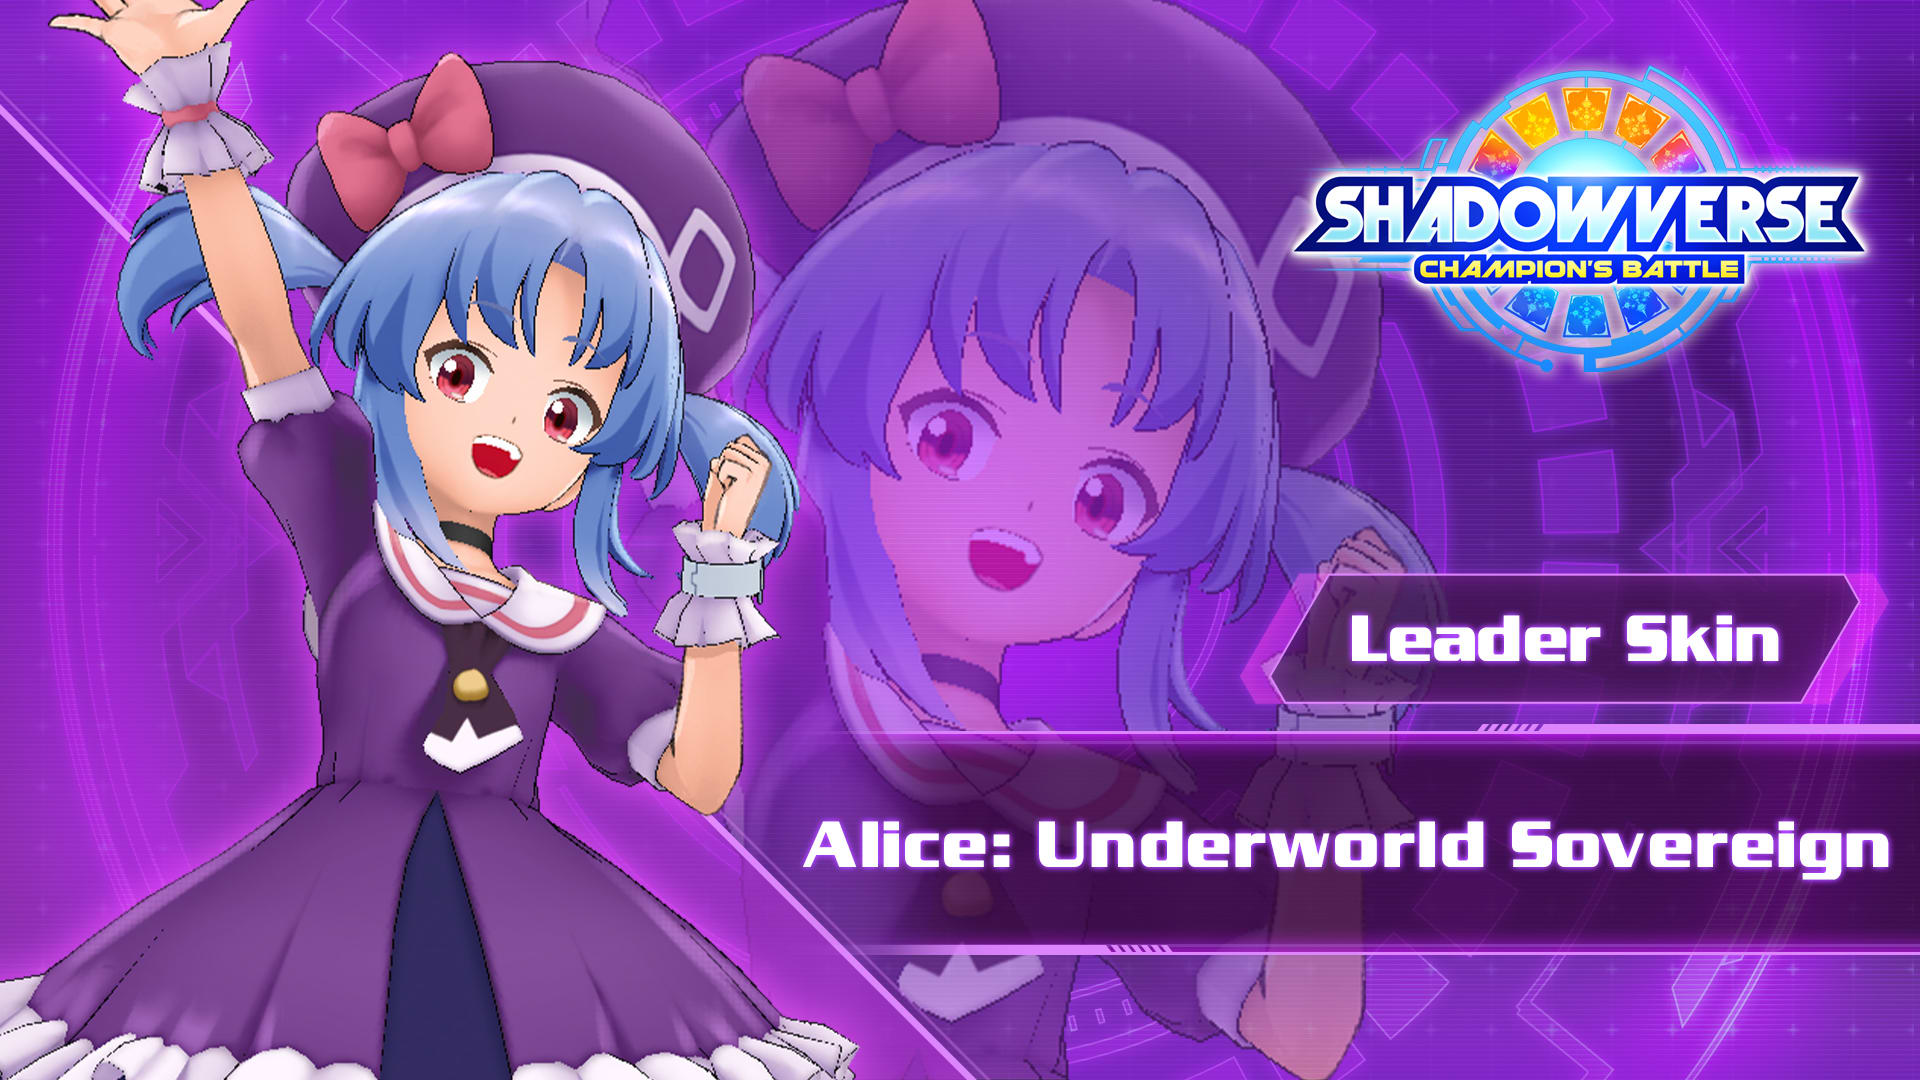 Leader Skin: "Alice: Underworld Sovereign"